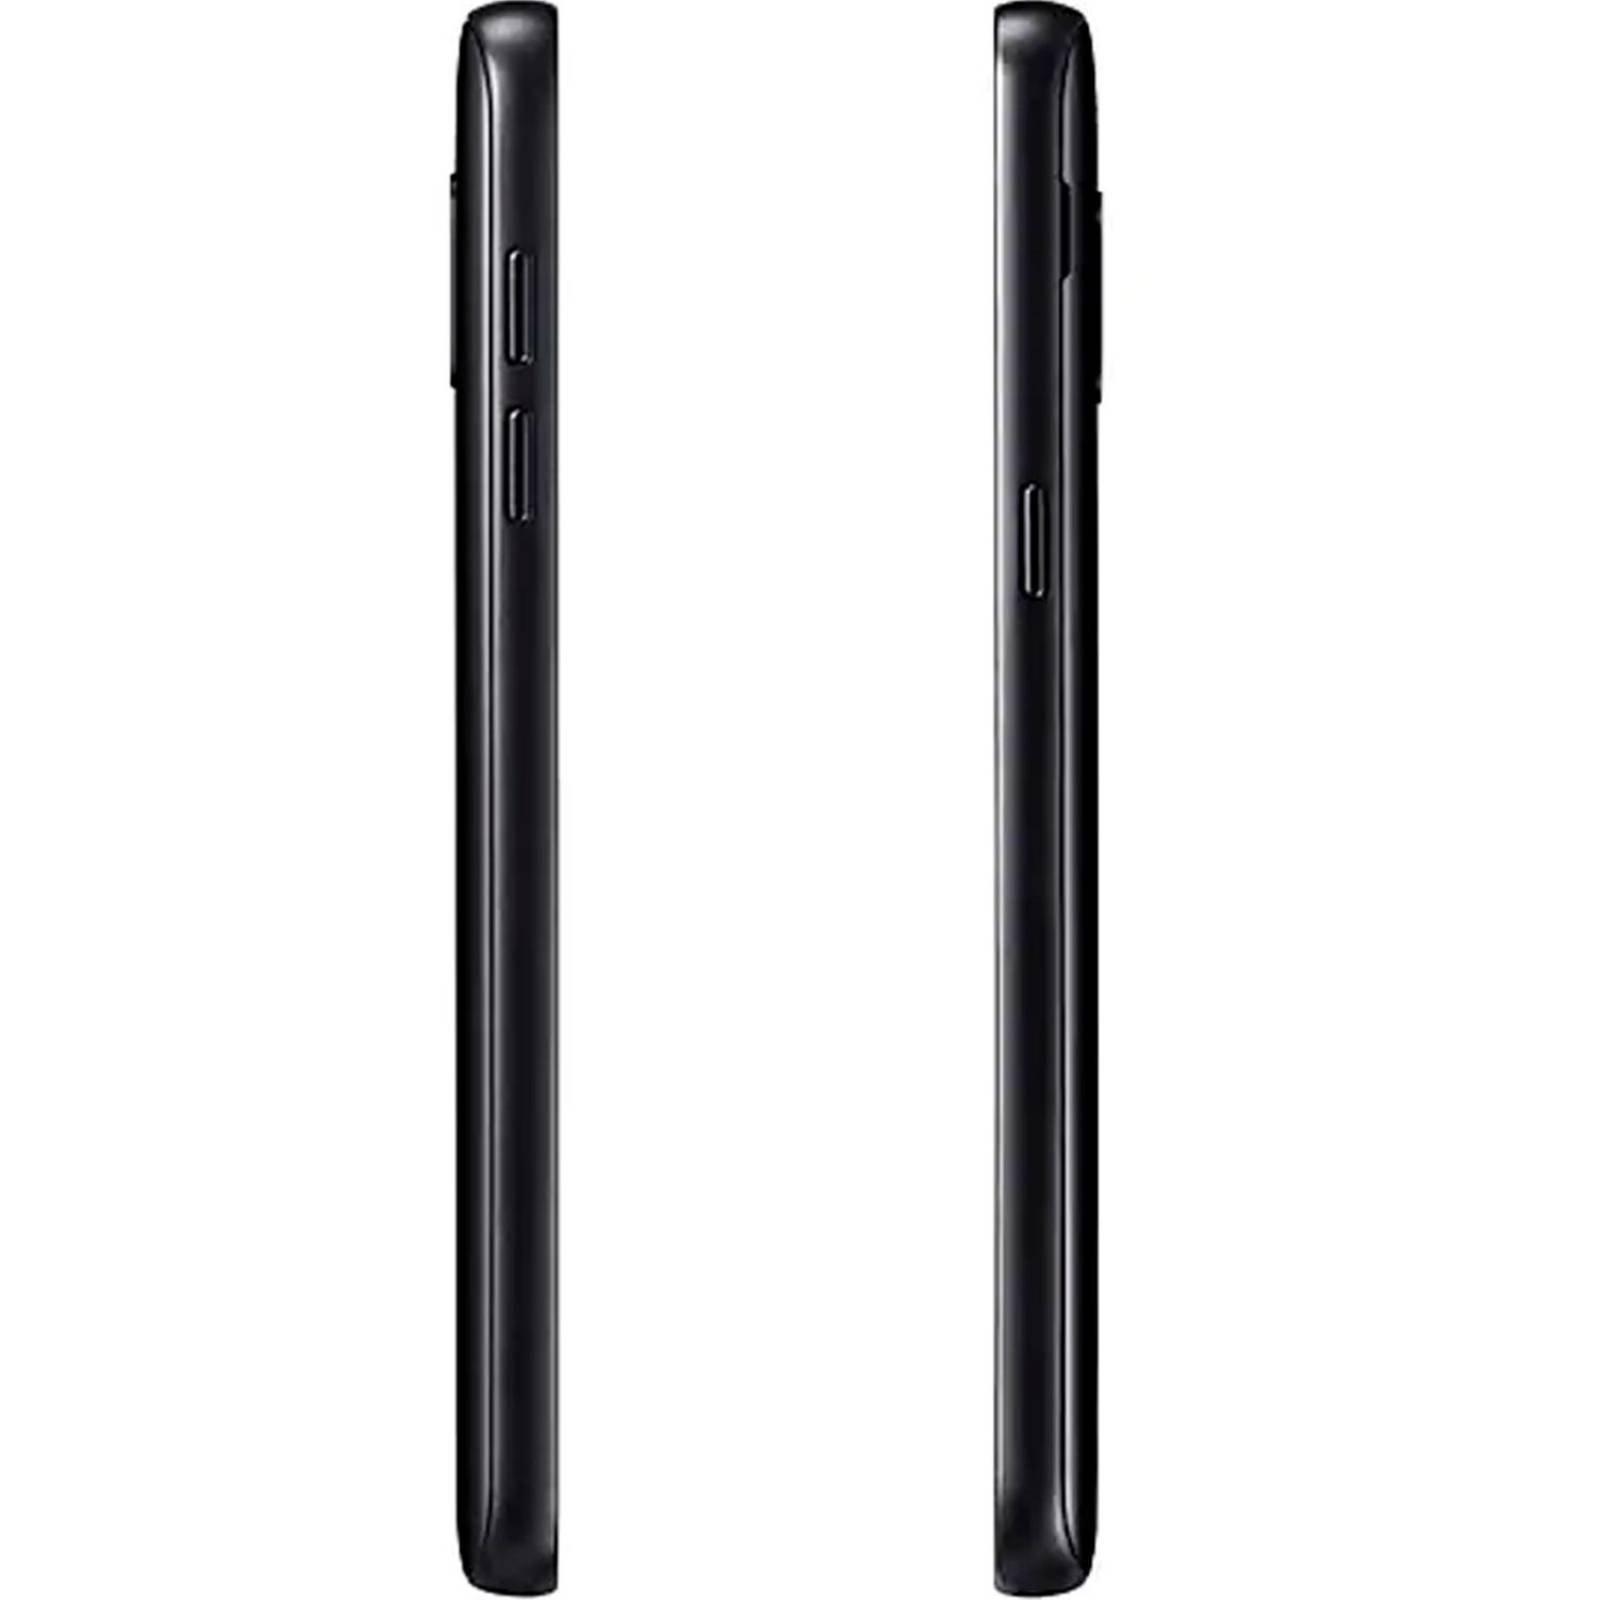 Celular SAMSUNG Galaxy J2 2GB 16GB Android 8 Quad Core Negro 